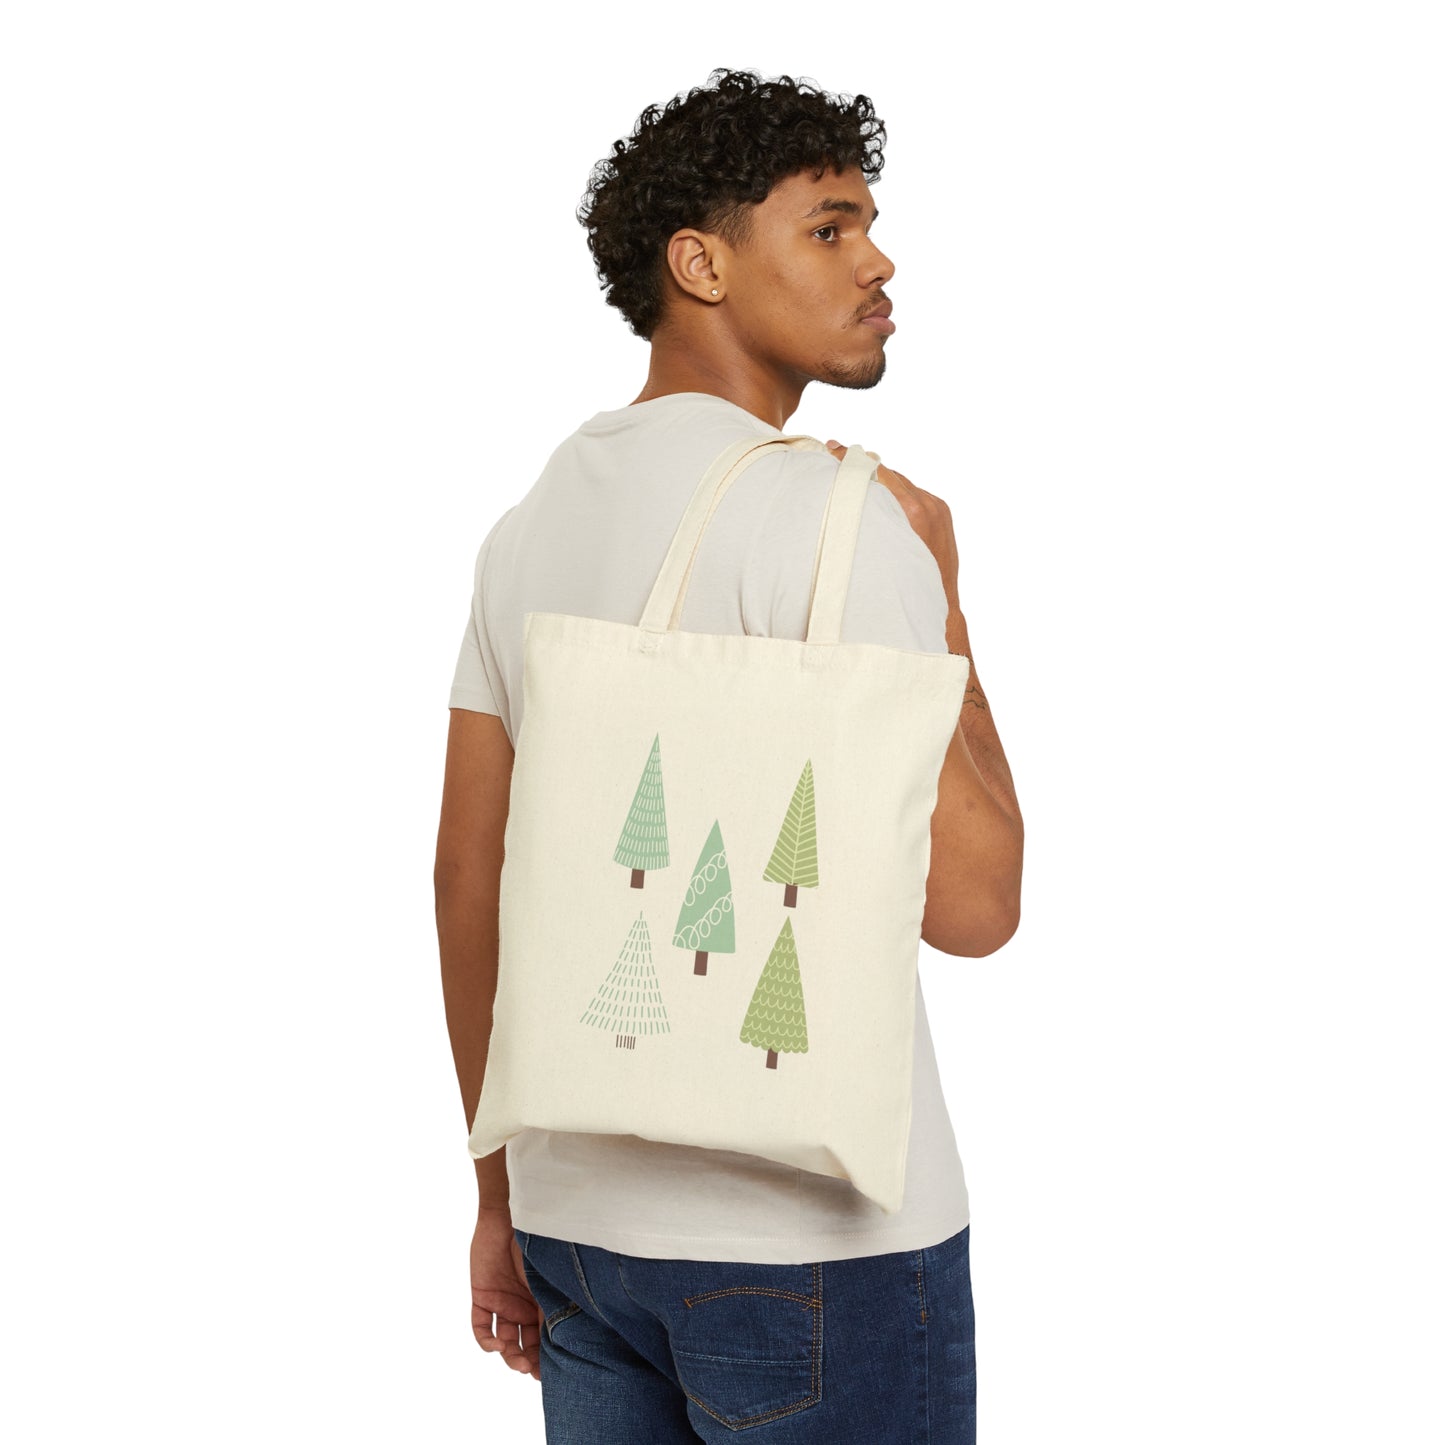 Minimalist Christmas Trees - Christmas Tote Bag - Cotton Canvas Tote Bag